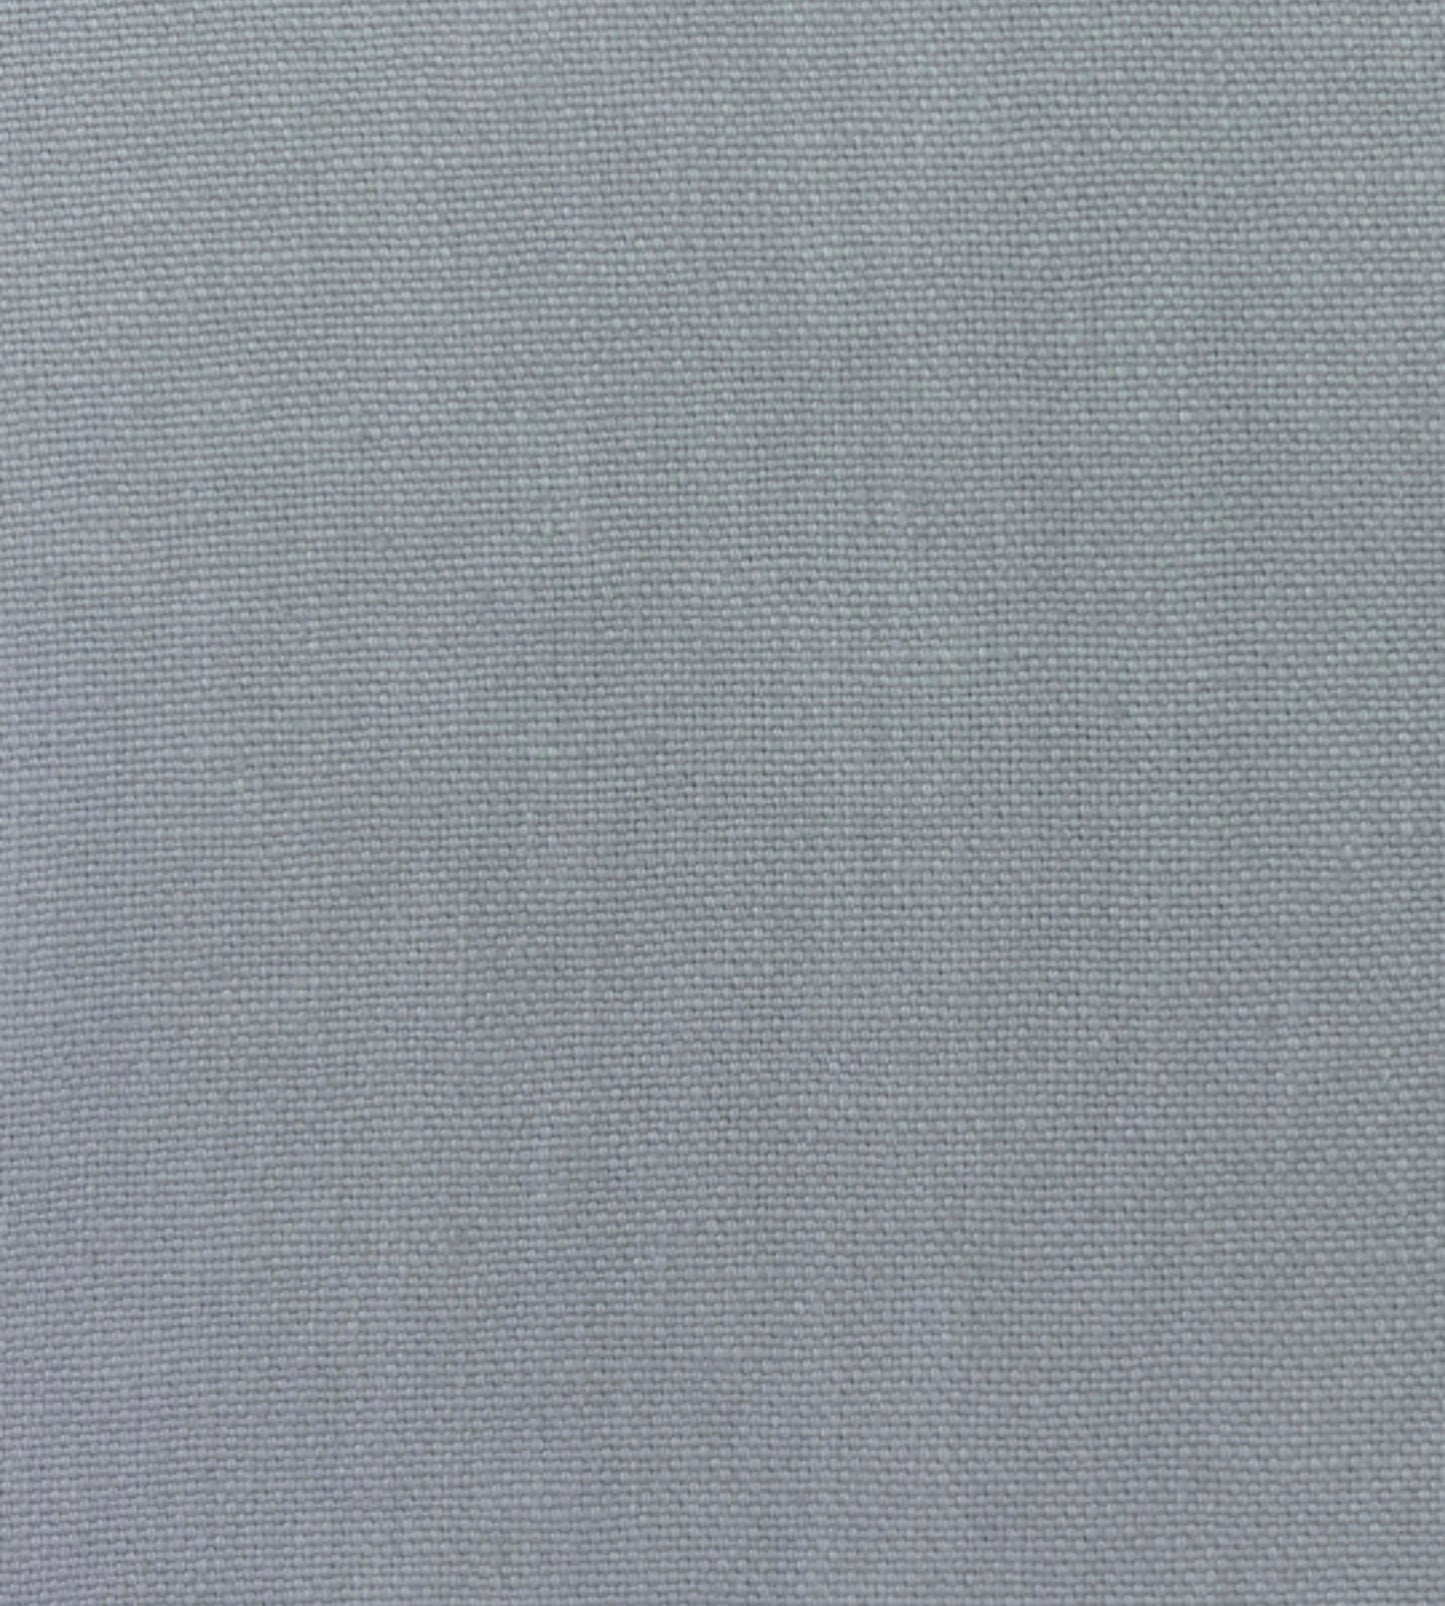 Purchase Scalamandre Fabric Pattern number SC 005927108, Toscana Linen Bluestone 1